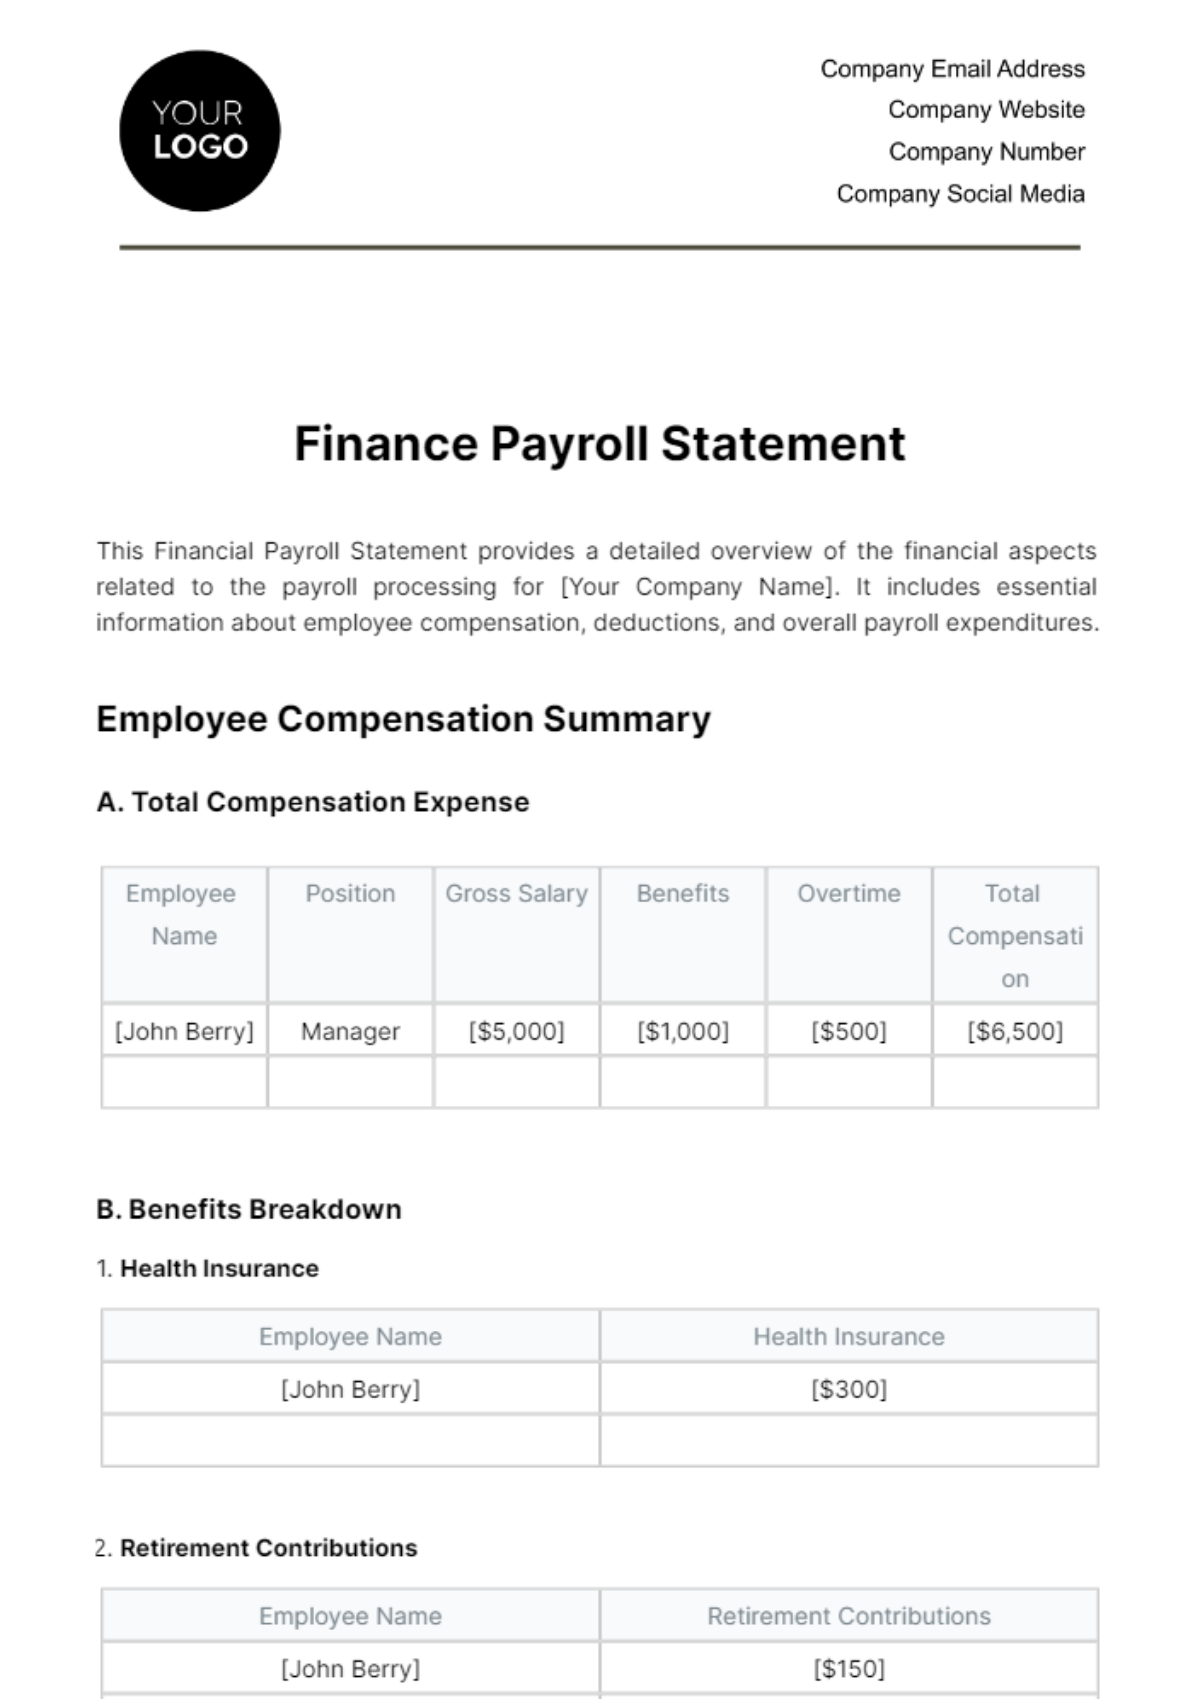 Finance Payroll Statement Template